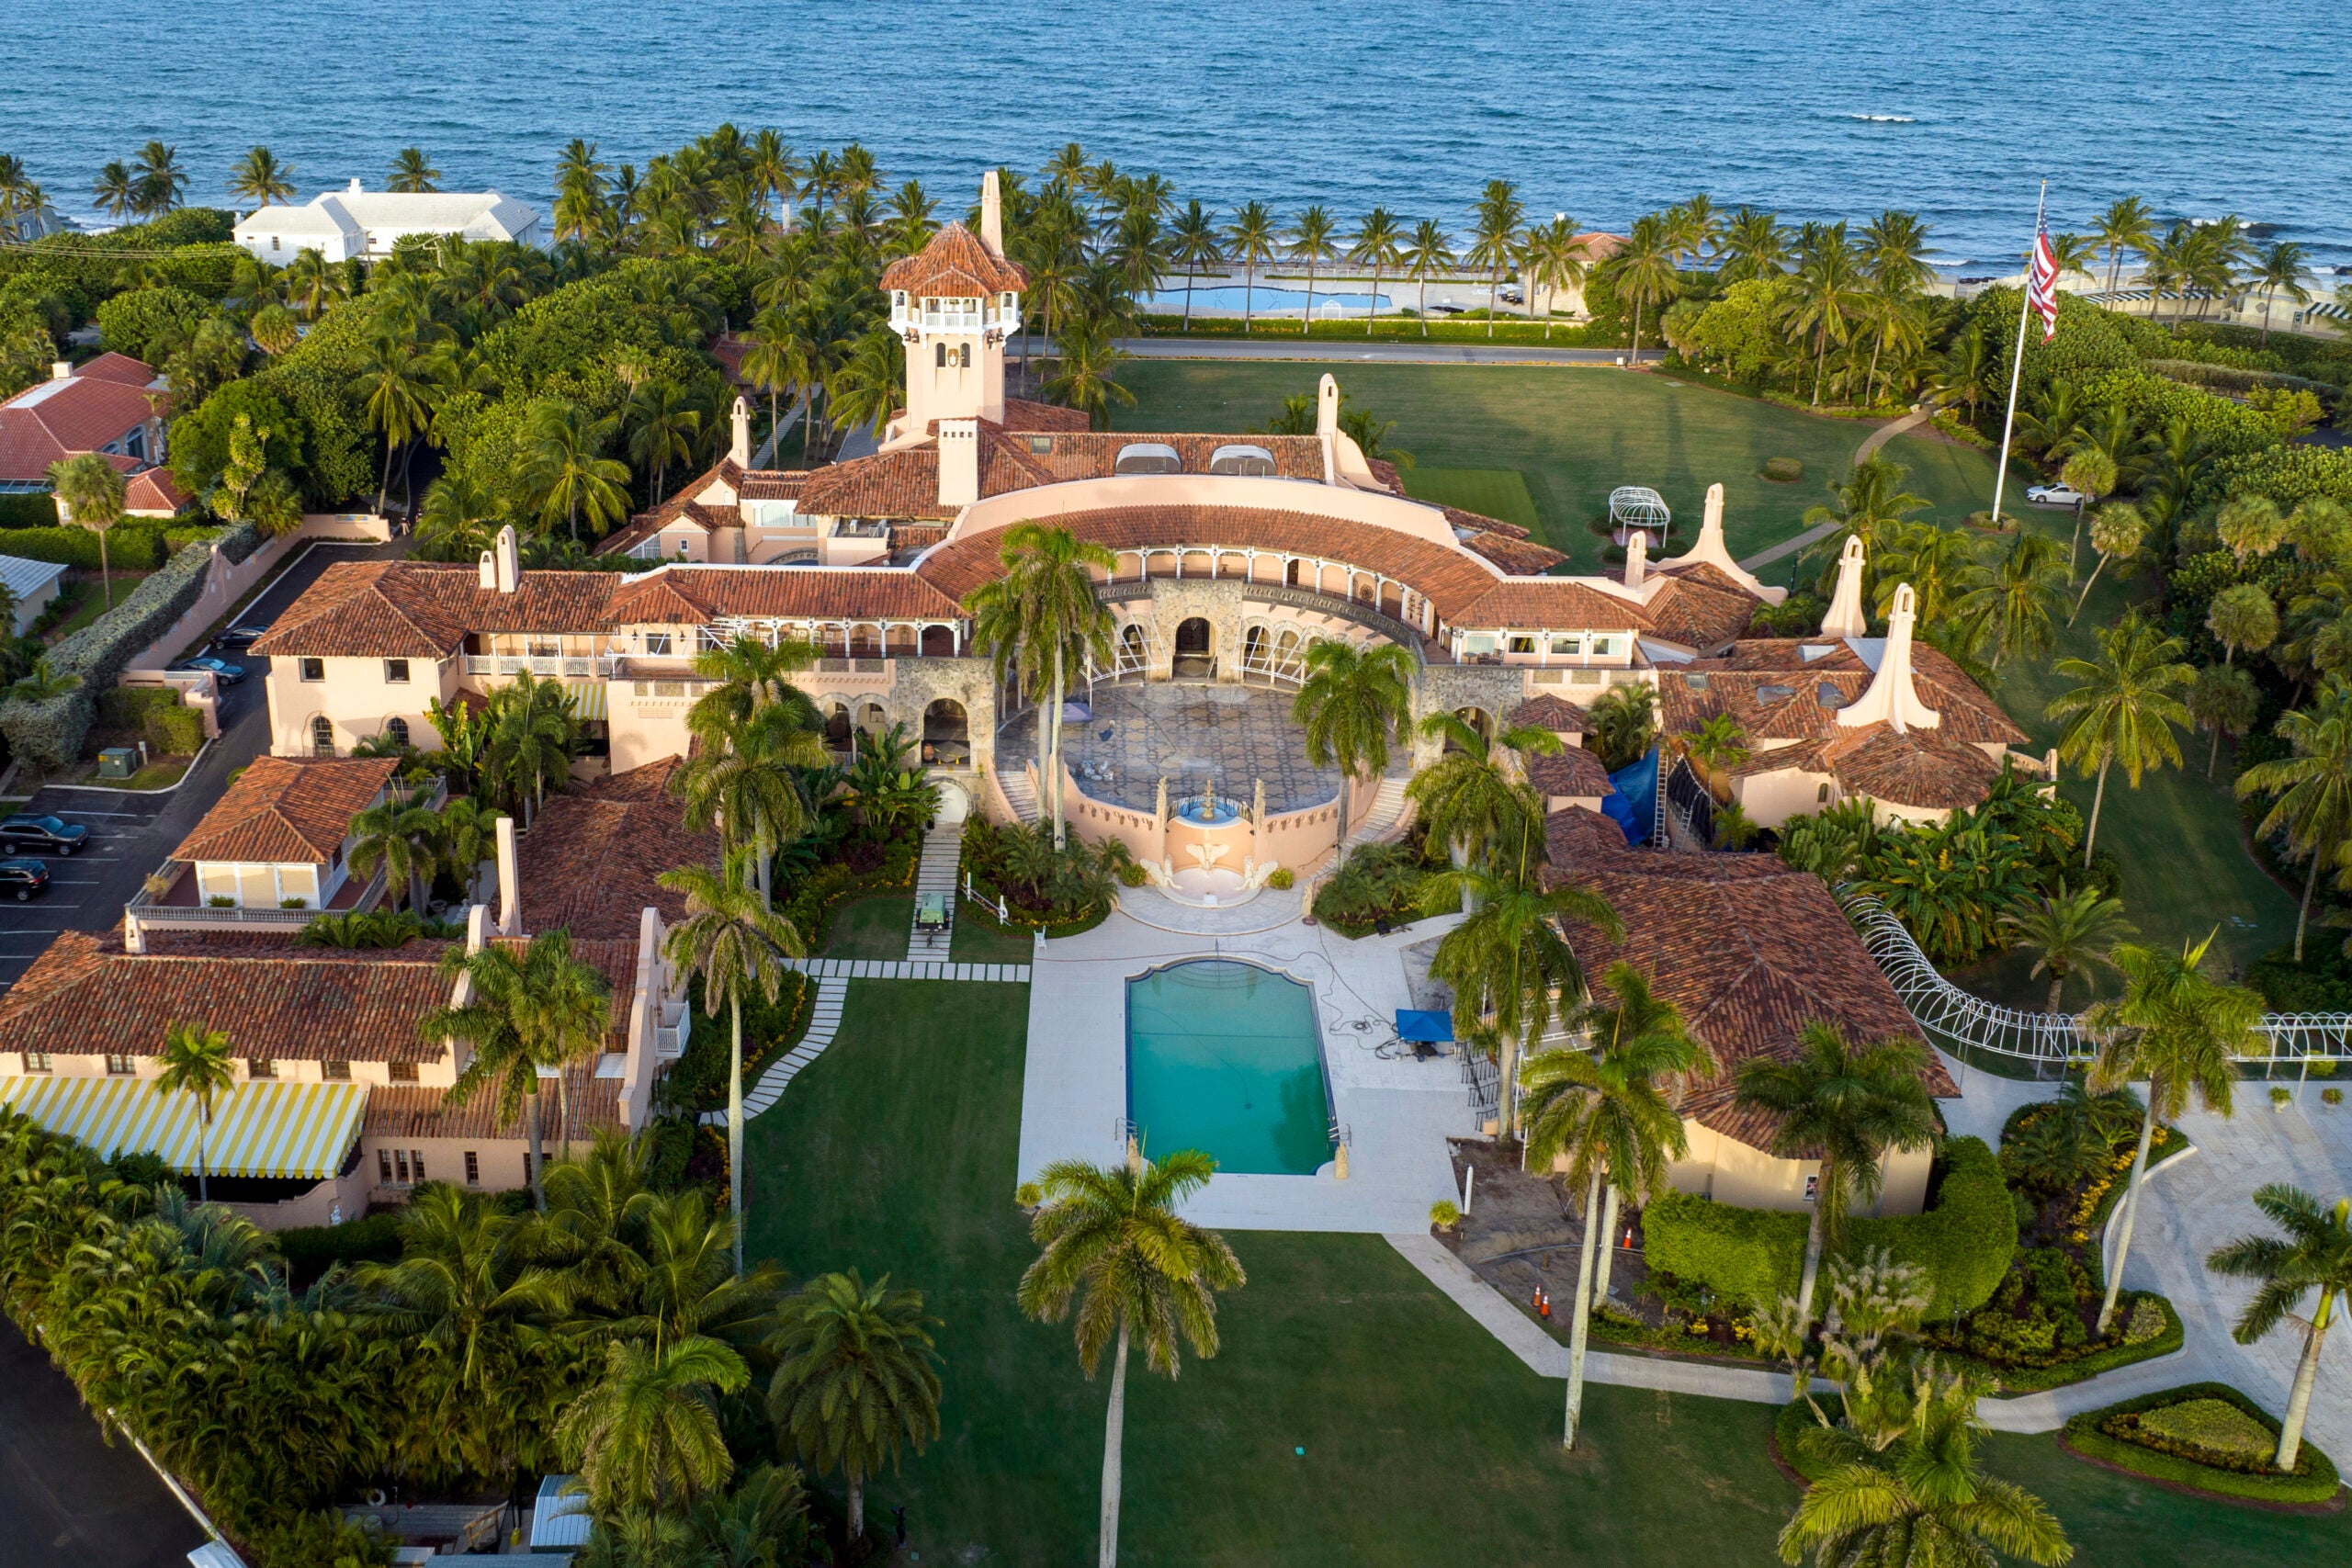 Donald Trump's Mar-a-Lago estate